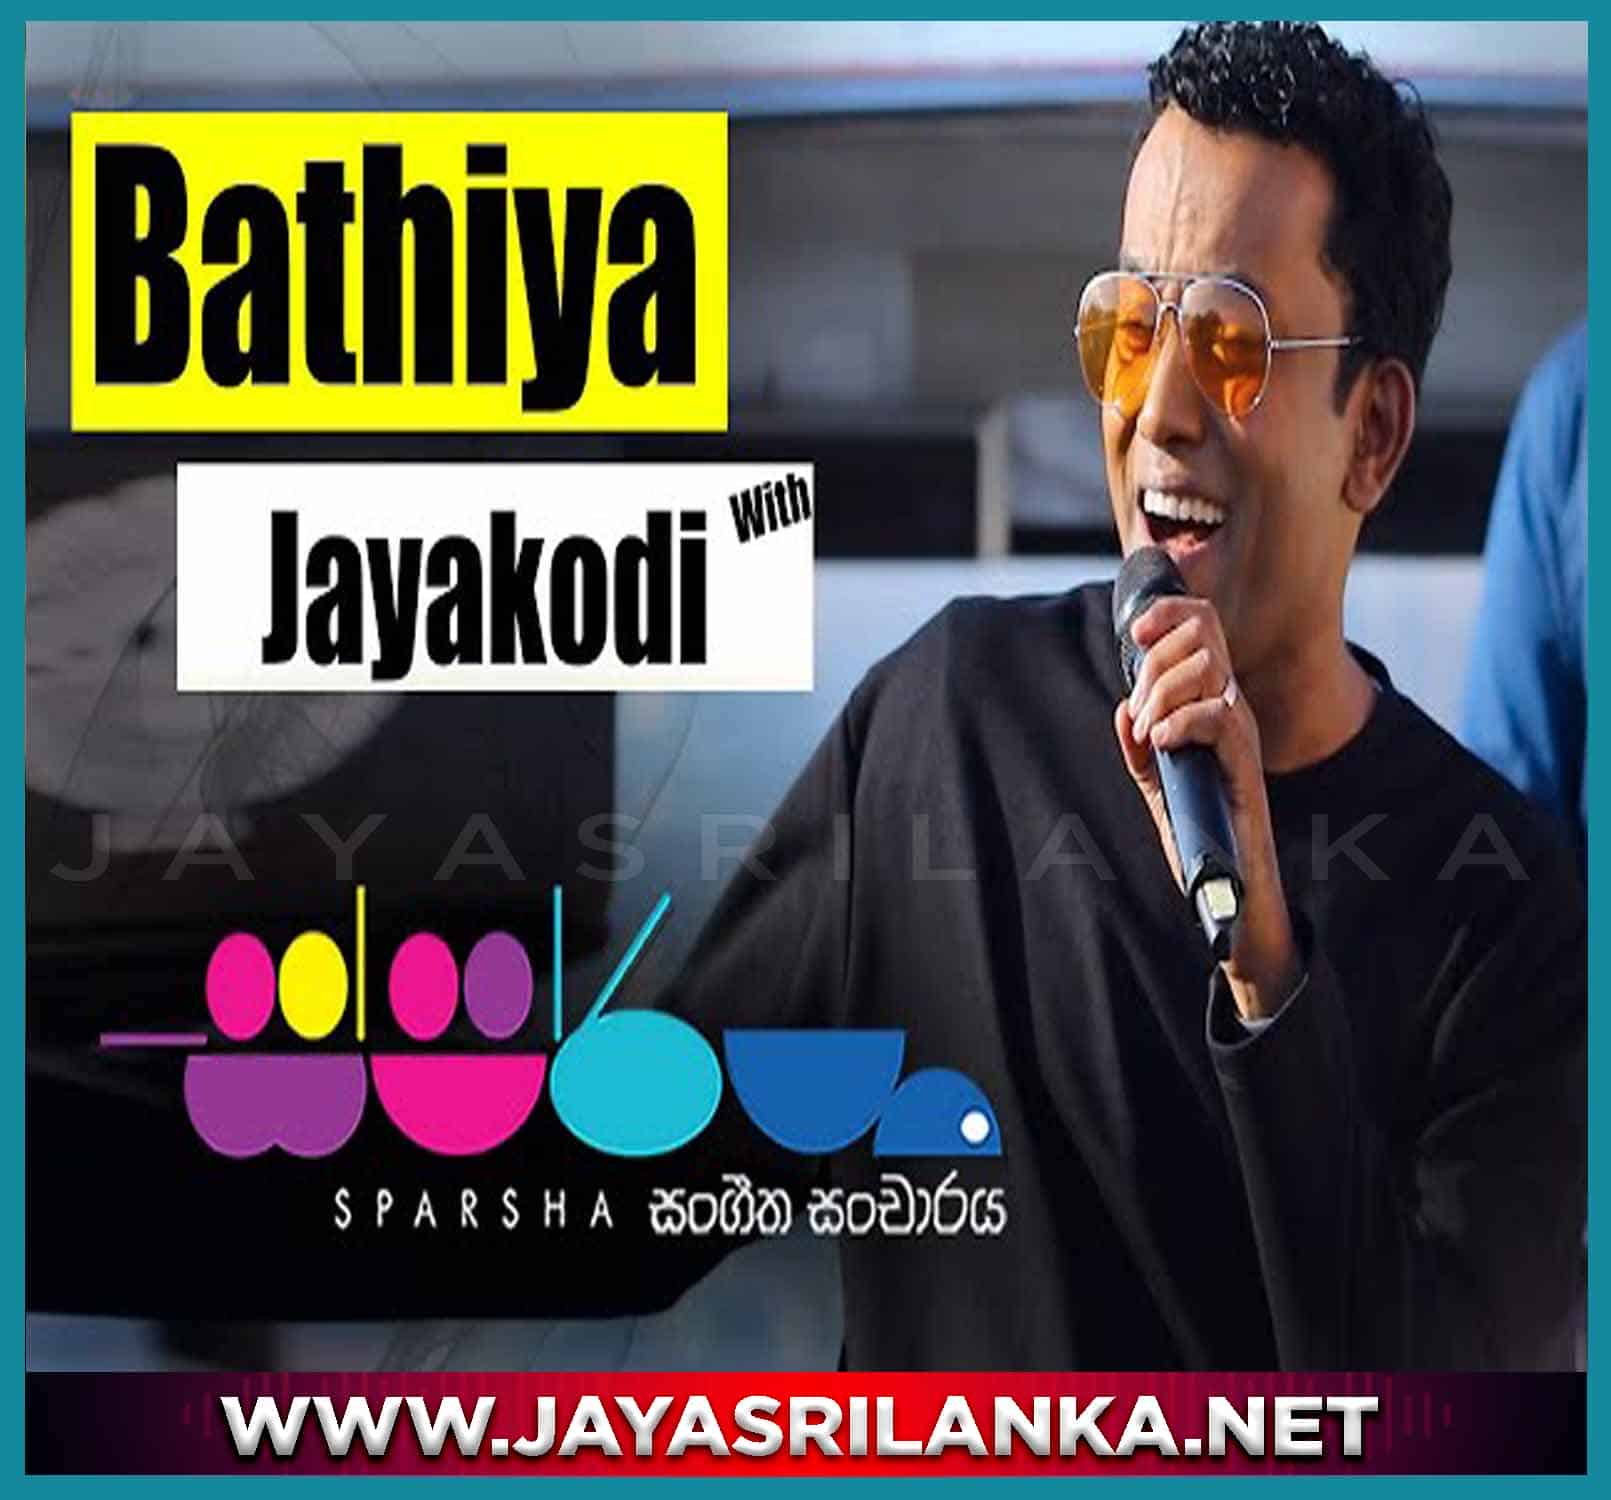 06 - Unuhuma Wida Wida - Kavikariye (Sparsha) - Bathiya Jayakody mp3 Image